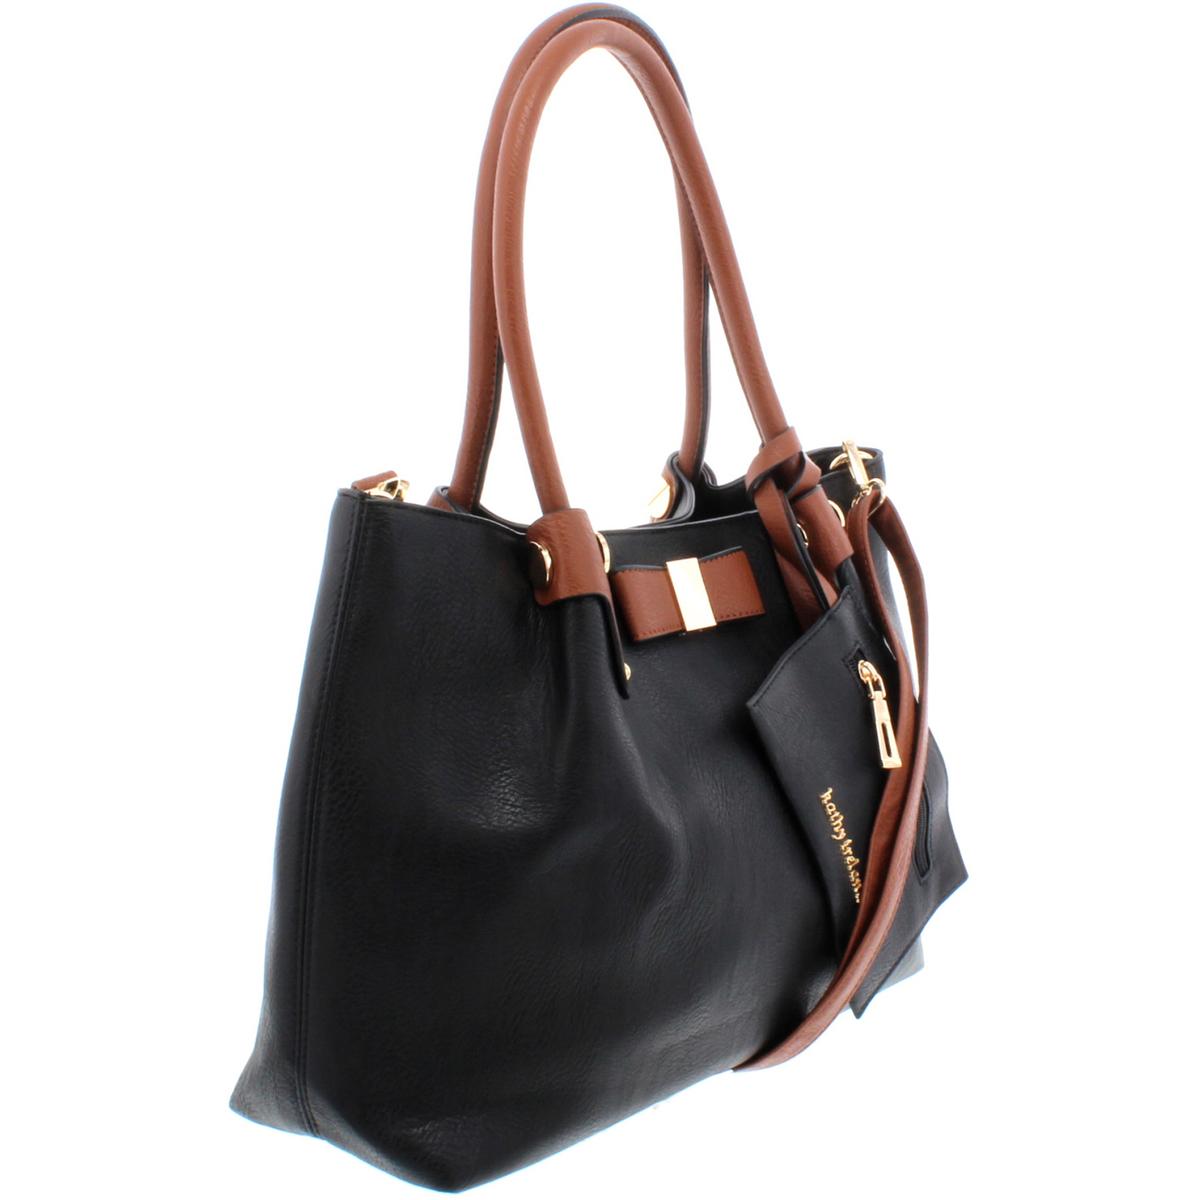 Kathy Ireland Womens Black Faux Leather Satchel Handbag Purse Medium BHFO 1800 643220004634 | eBay